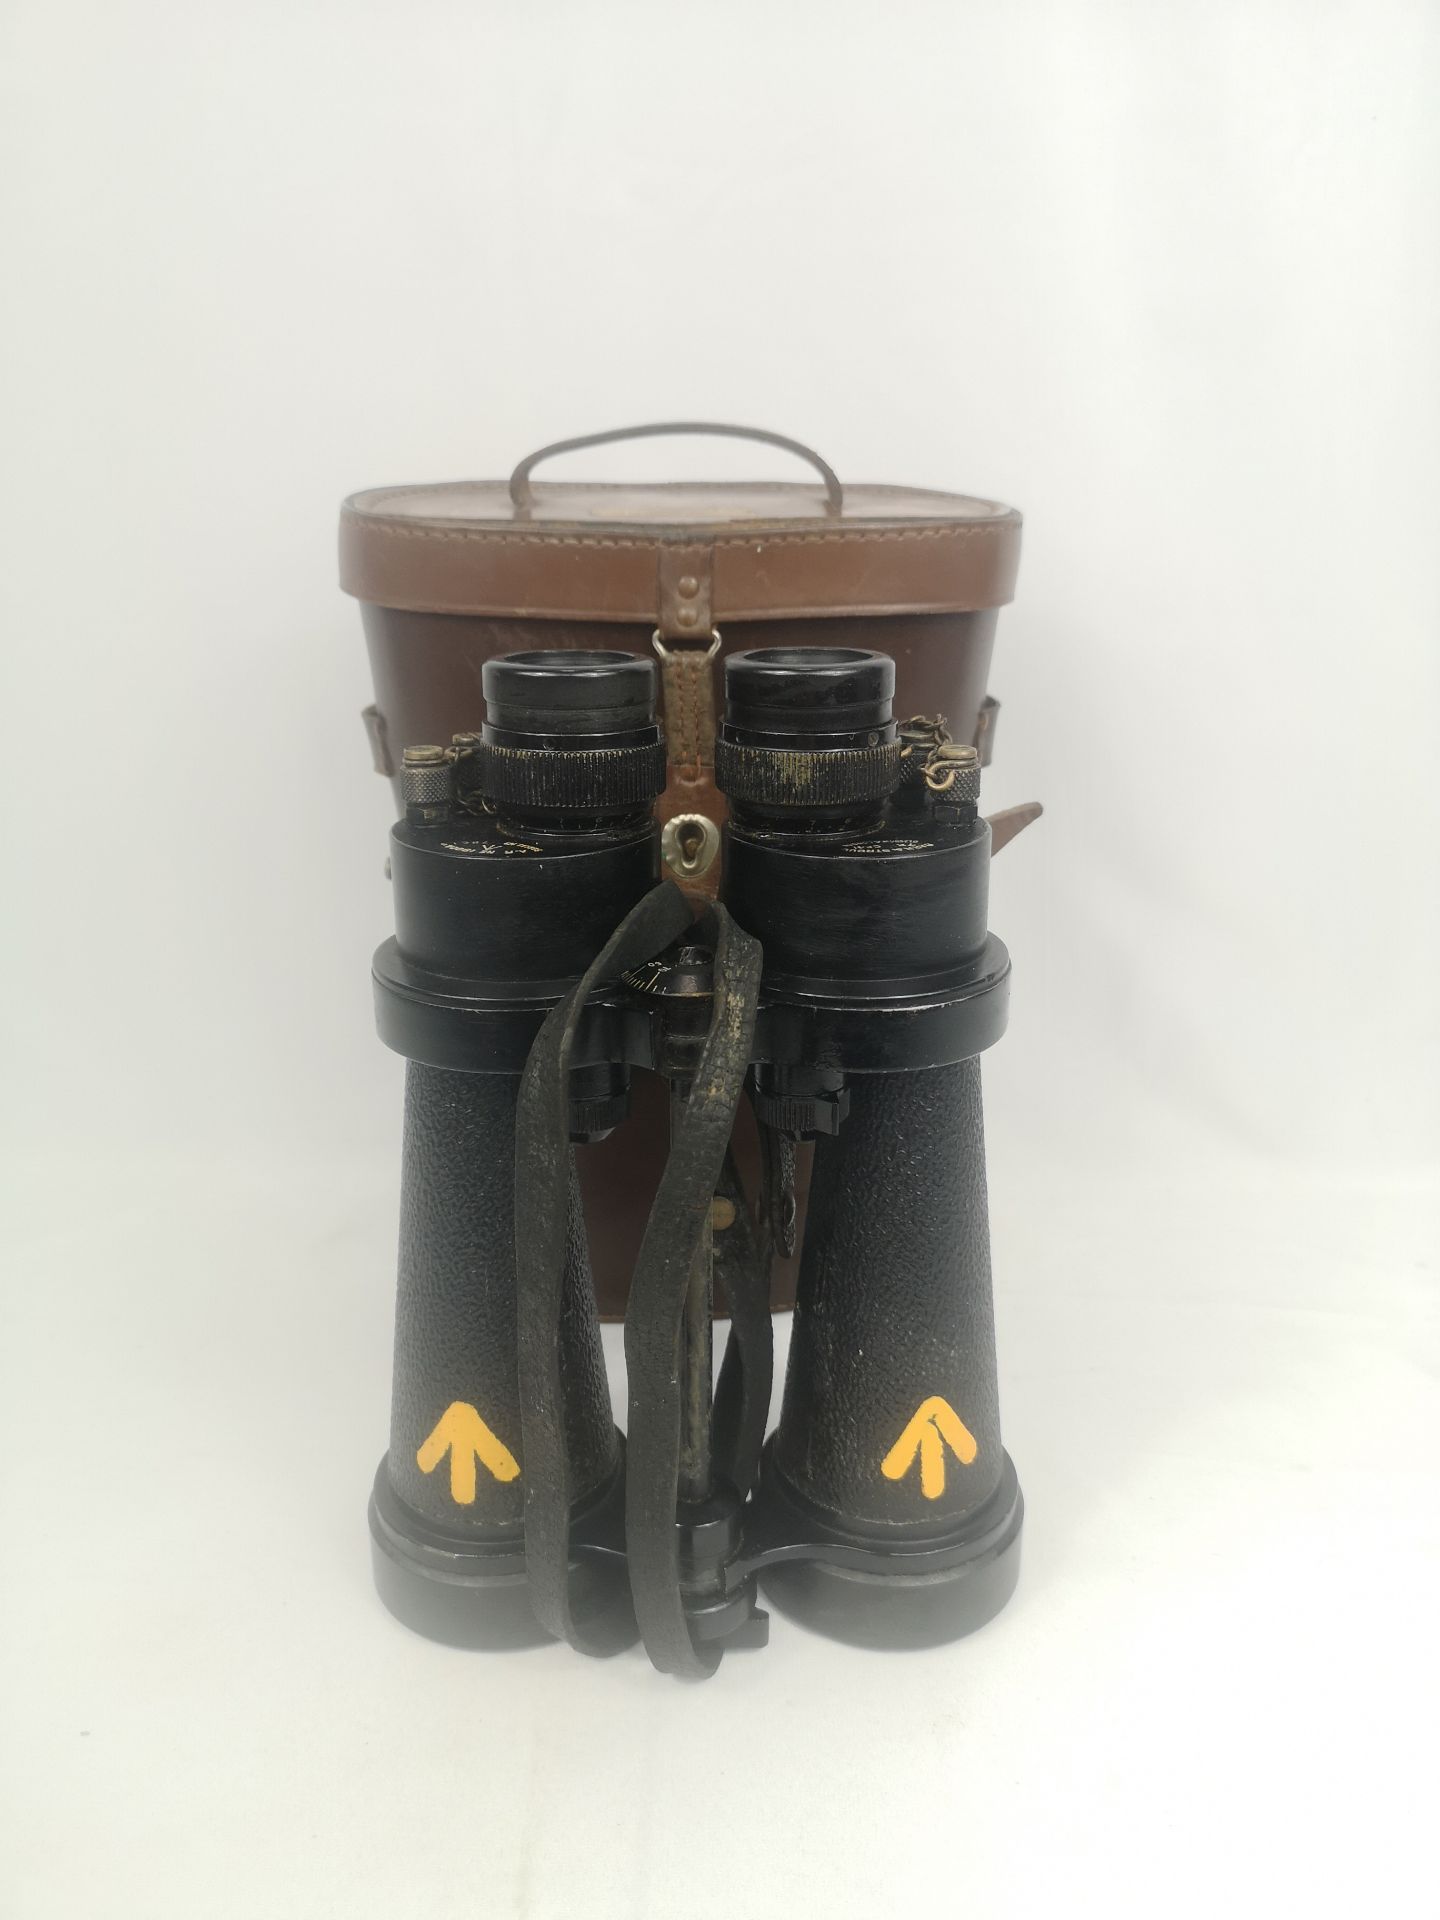 Pair of Barr and Stroud 7x binoculars - Image 3 of 5